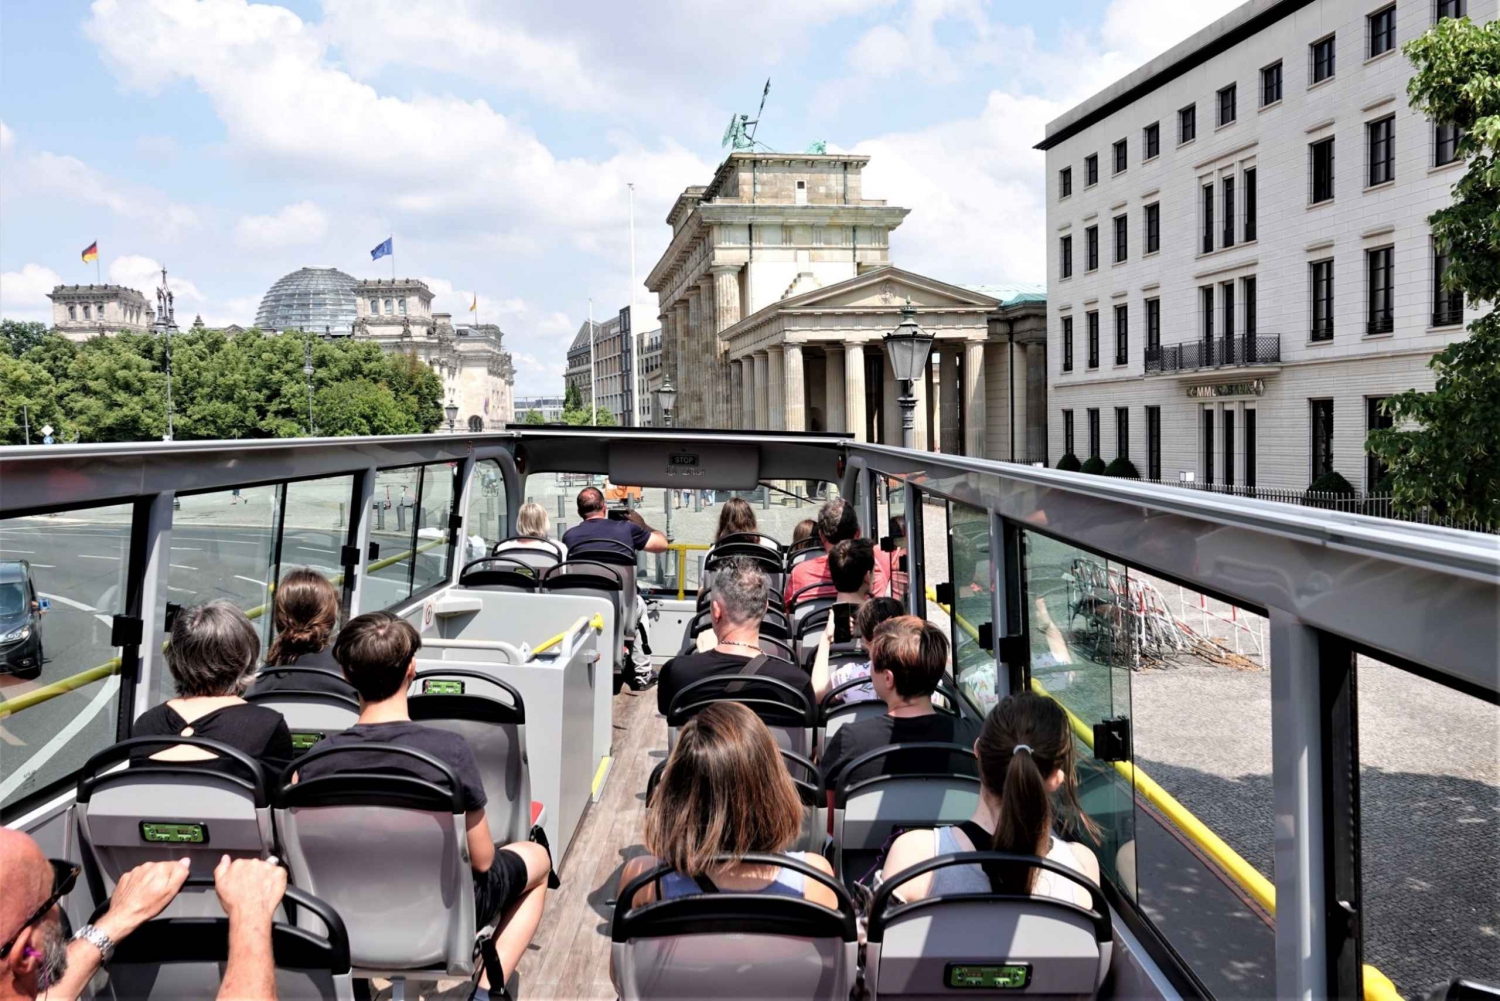 Best of Berlin: Hop-on Hop-off Bus Tour Ticket